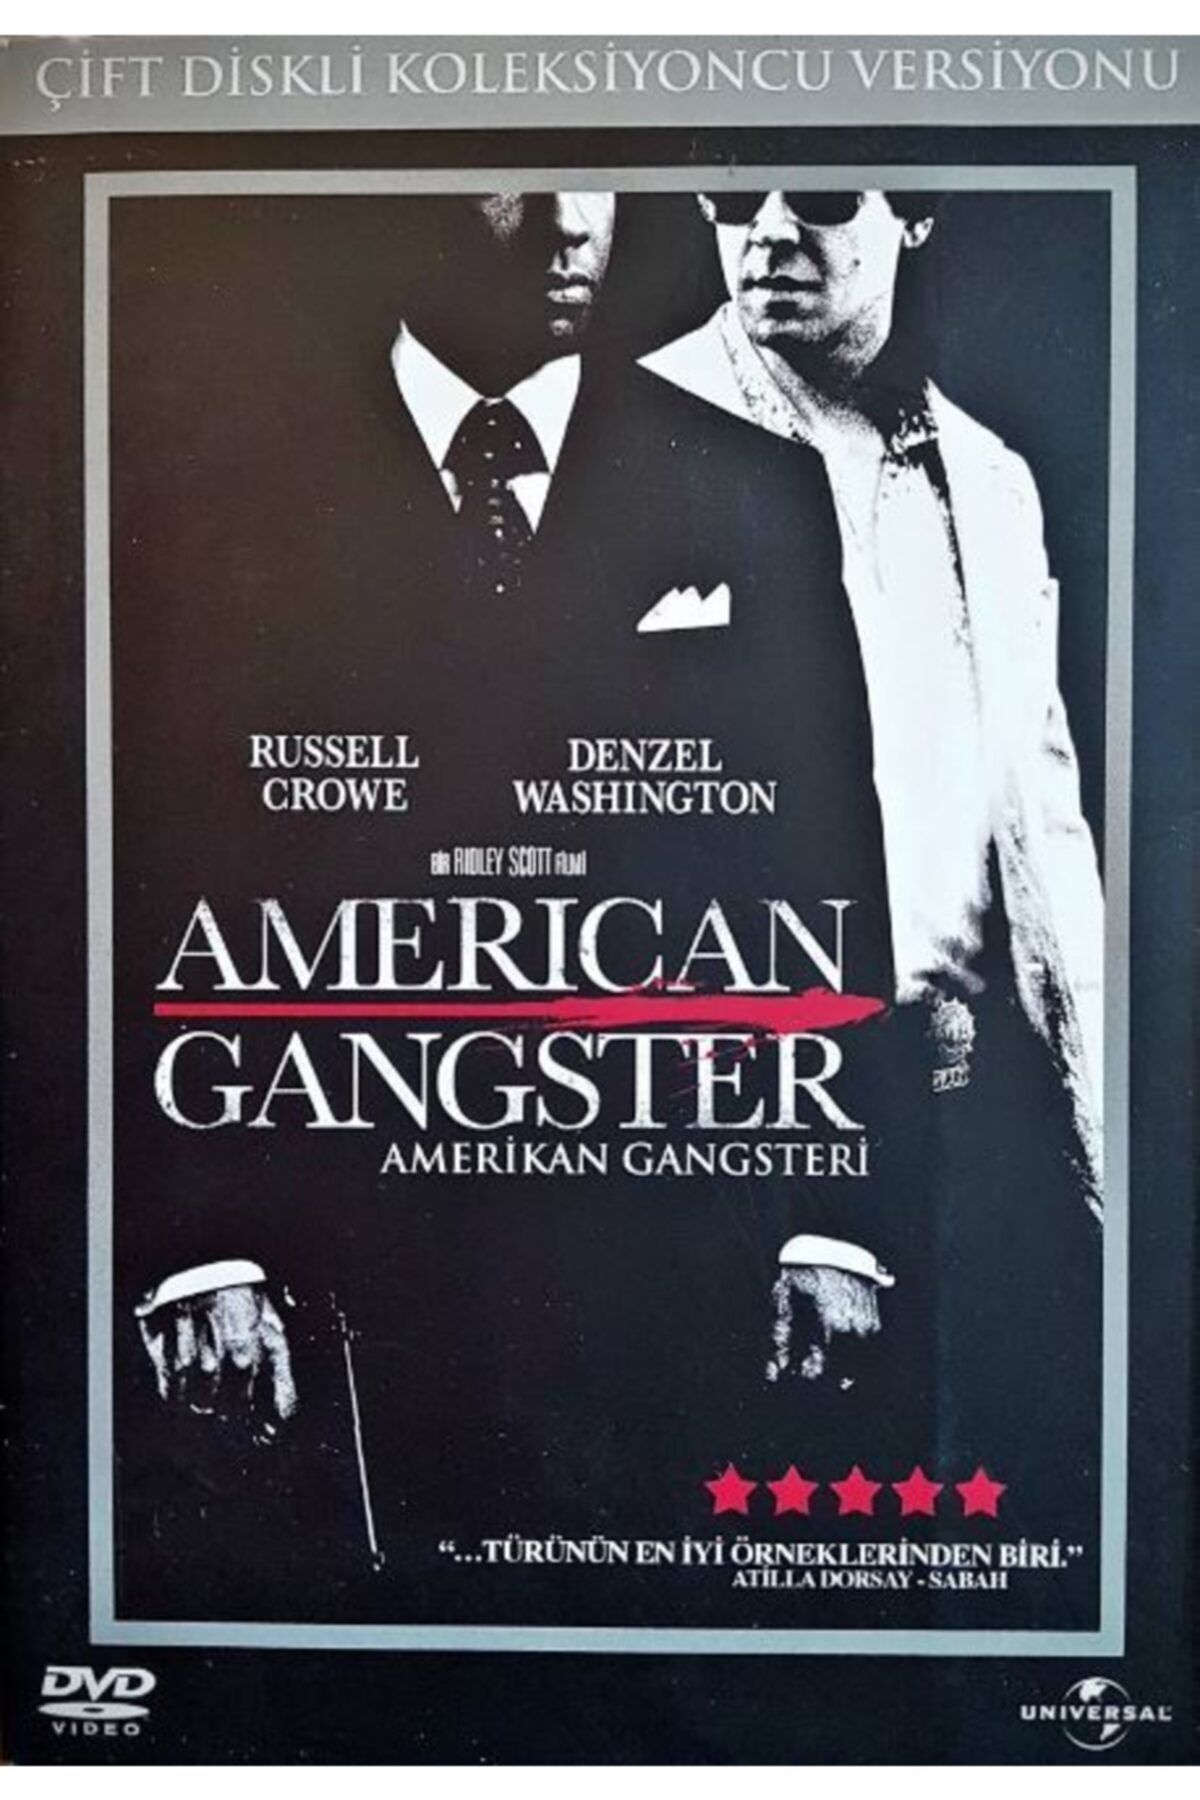 Universal American Gangster (amerikan Gangsteri) (2 Disk'li Versiyon) Dvd